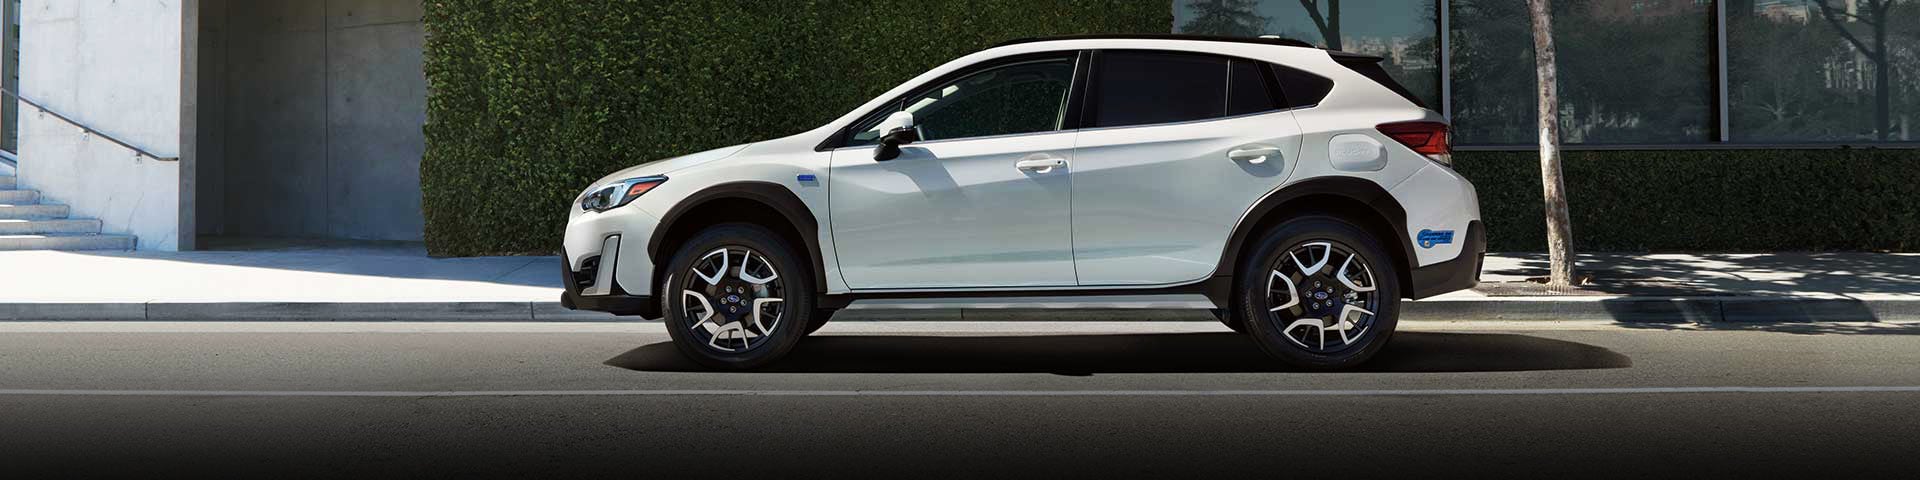 The side profile of a white Subaru Crosstrek Hybrid | Valley Subaru of Longmont in Longmont CO